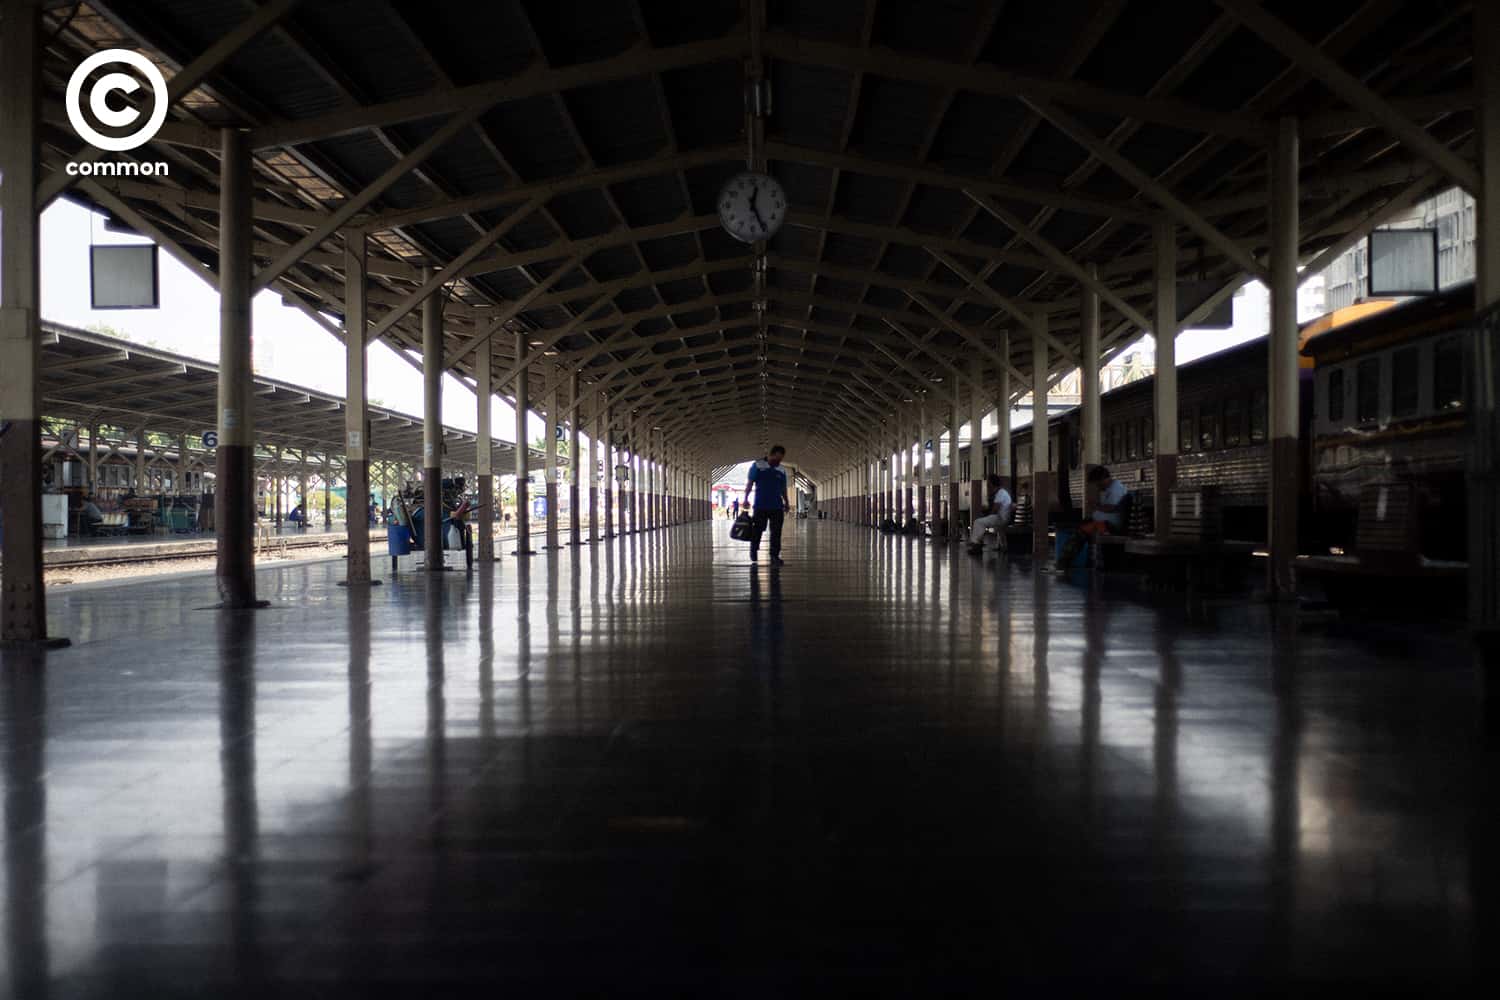 #PHOTOESSAY #สถานีรถไฟกรุงเทพ #หัวลำโพง #becommon